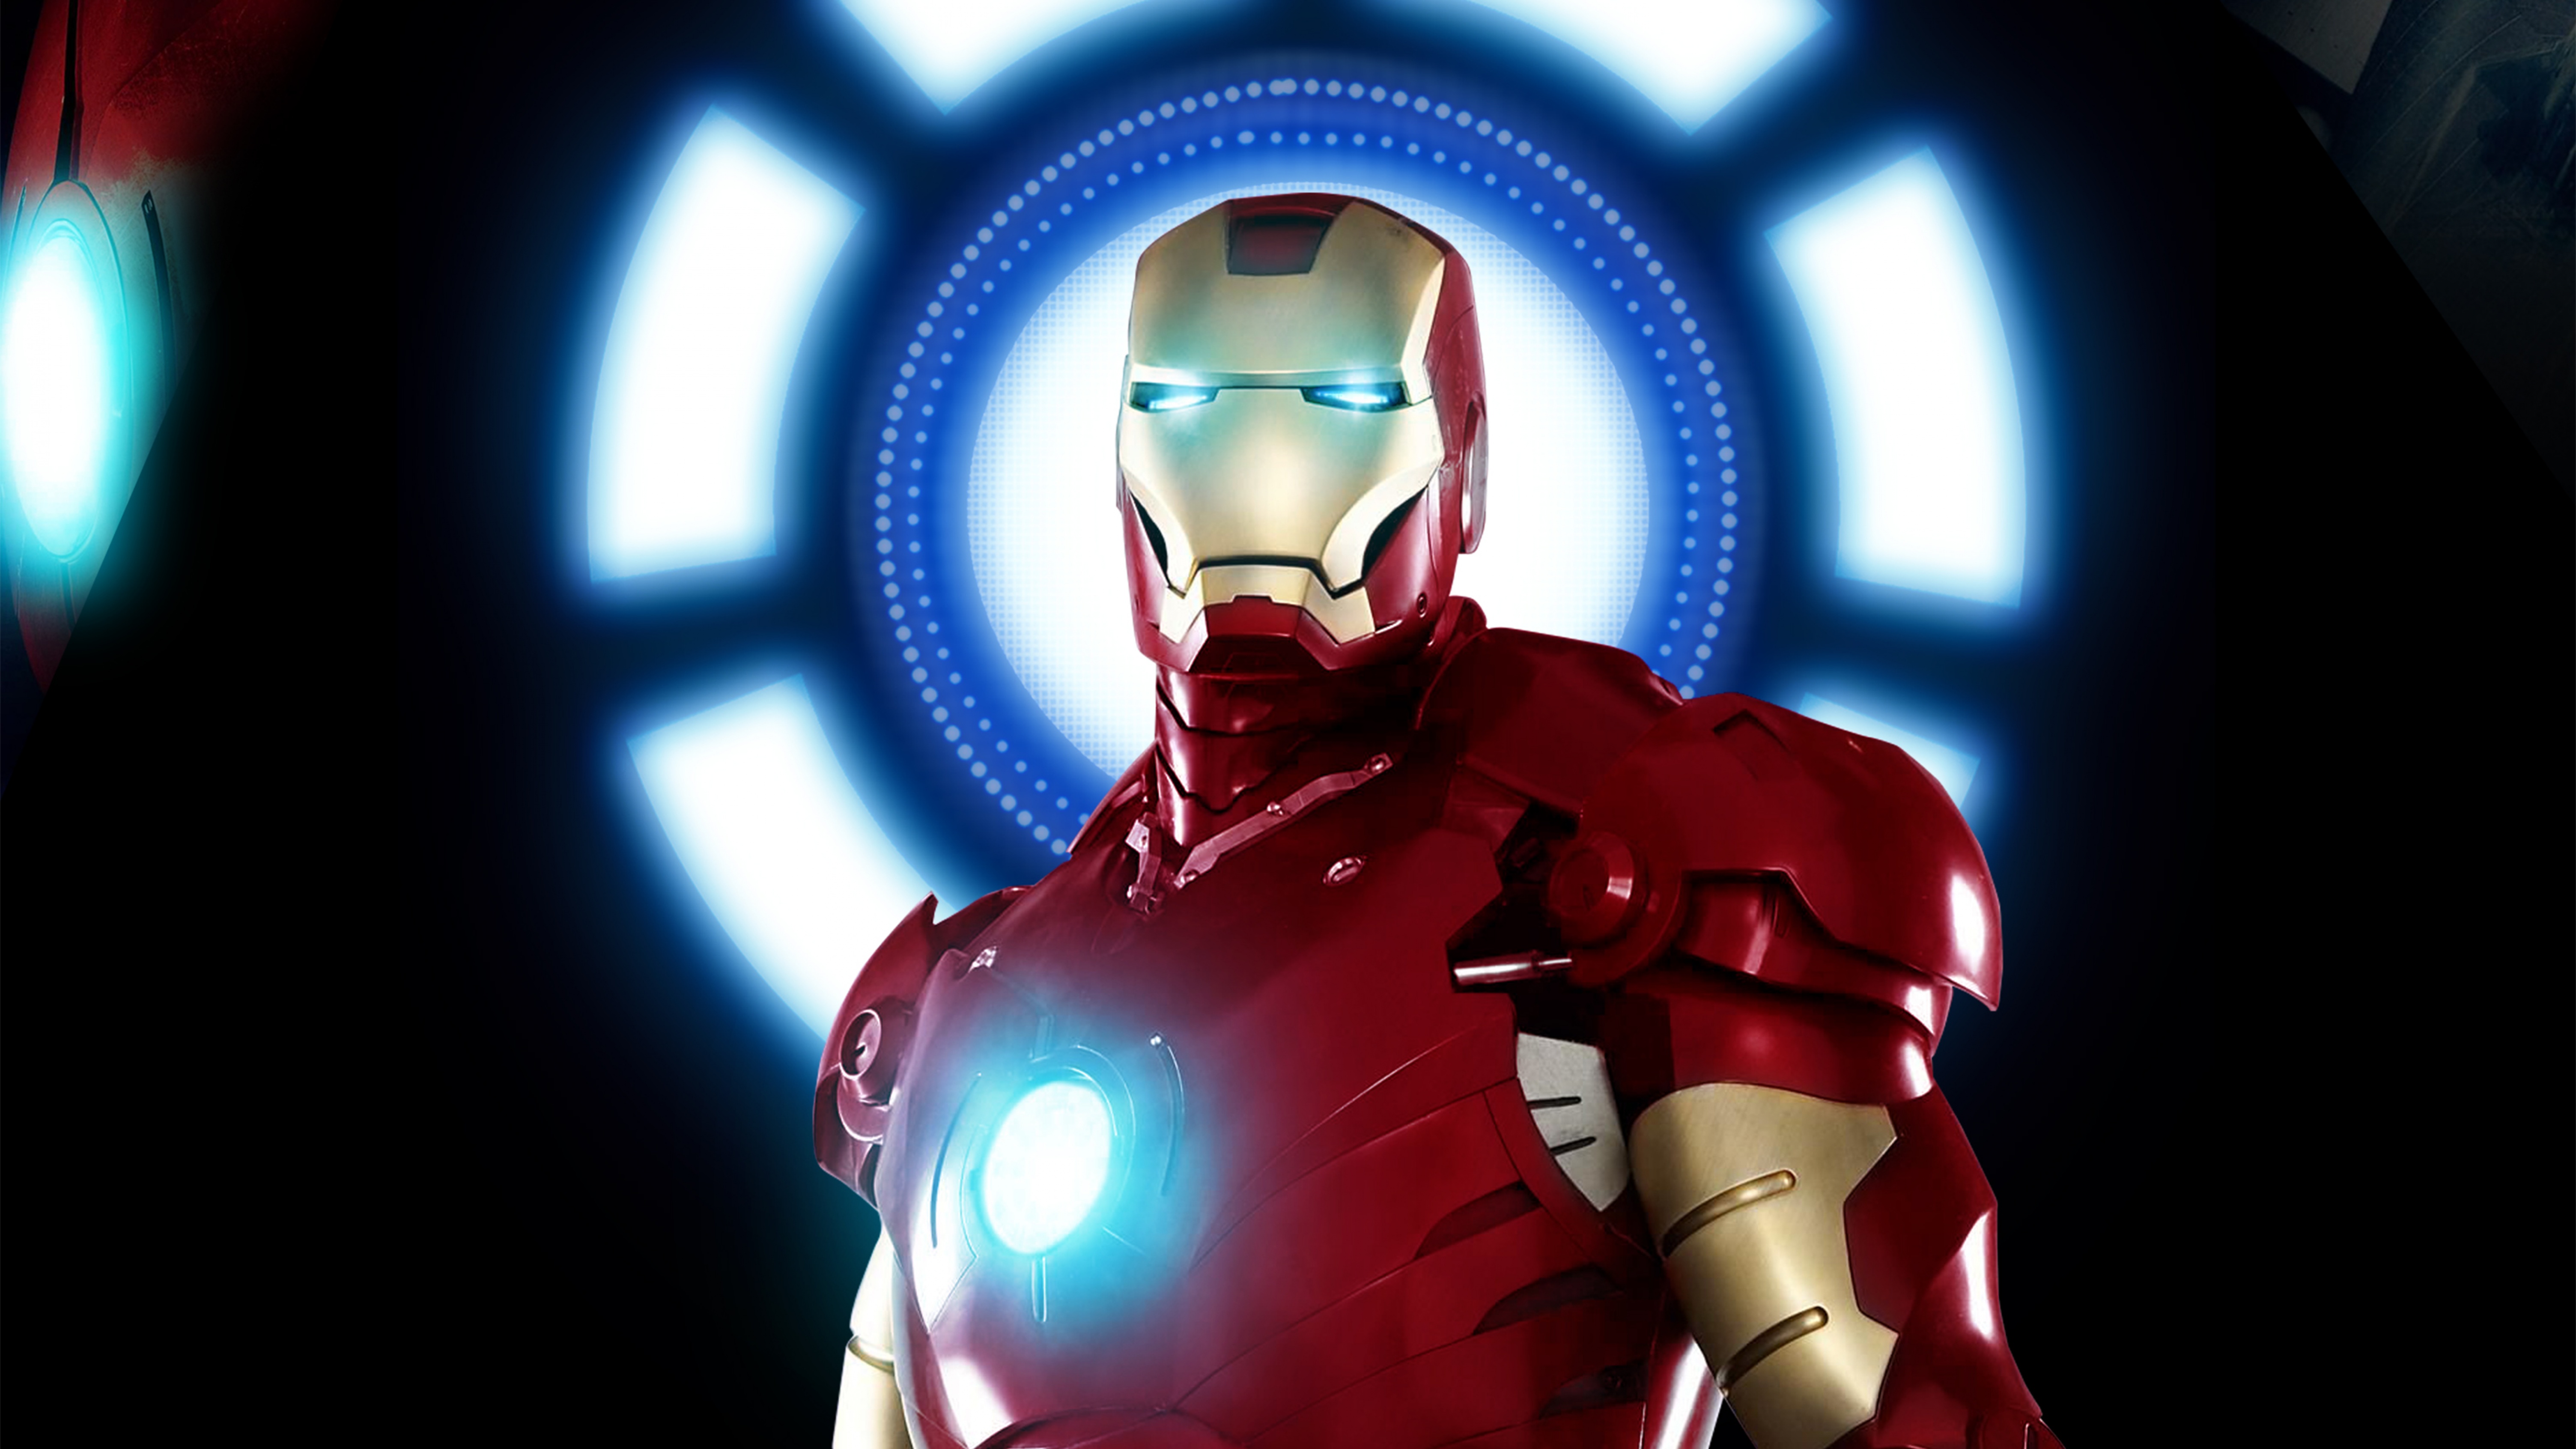 Avengers Endgame Tony Stark Iron Man iPhone Wallpaper  iPhone Wallpapers   iPhone Wallpapers